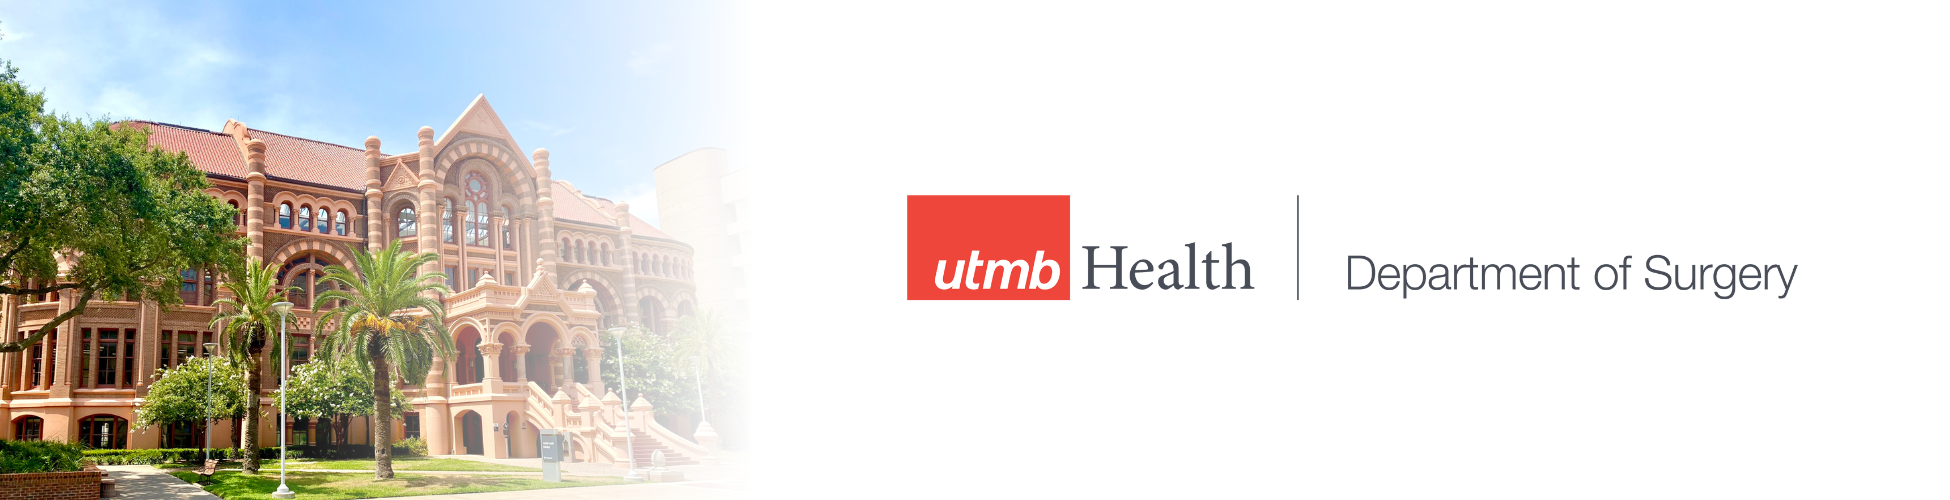 UTMB Health Department of Surgery Homepage Banner